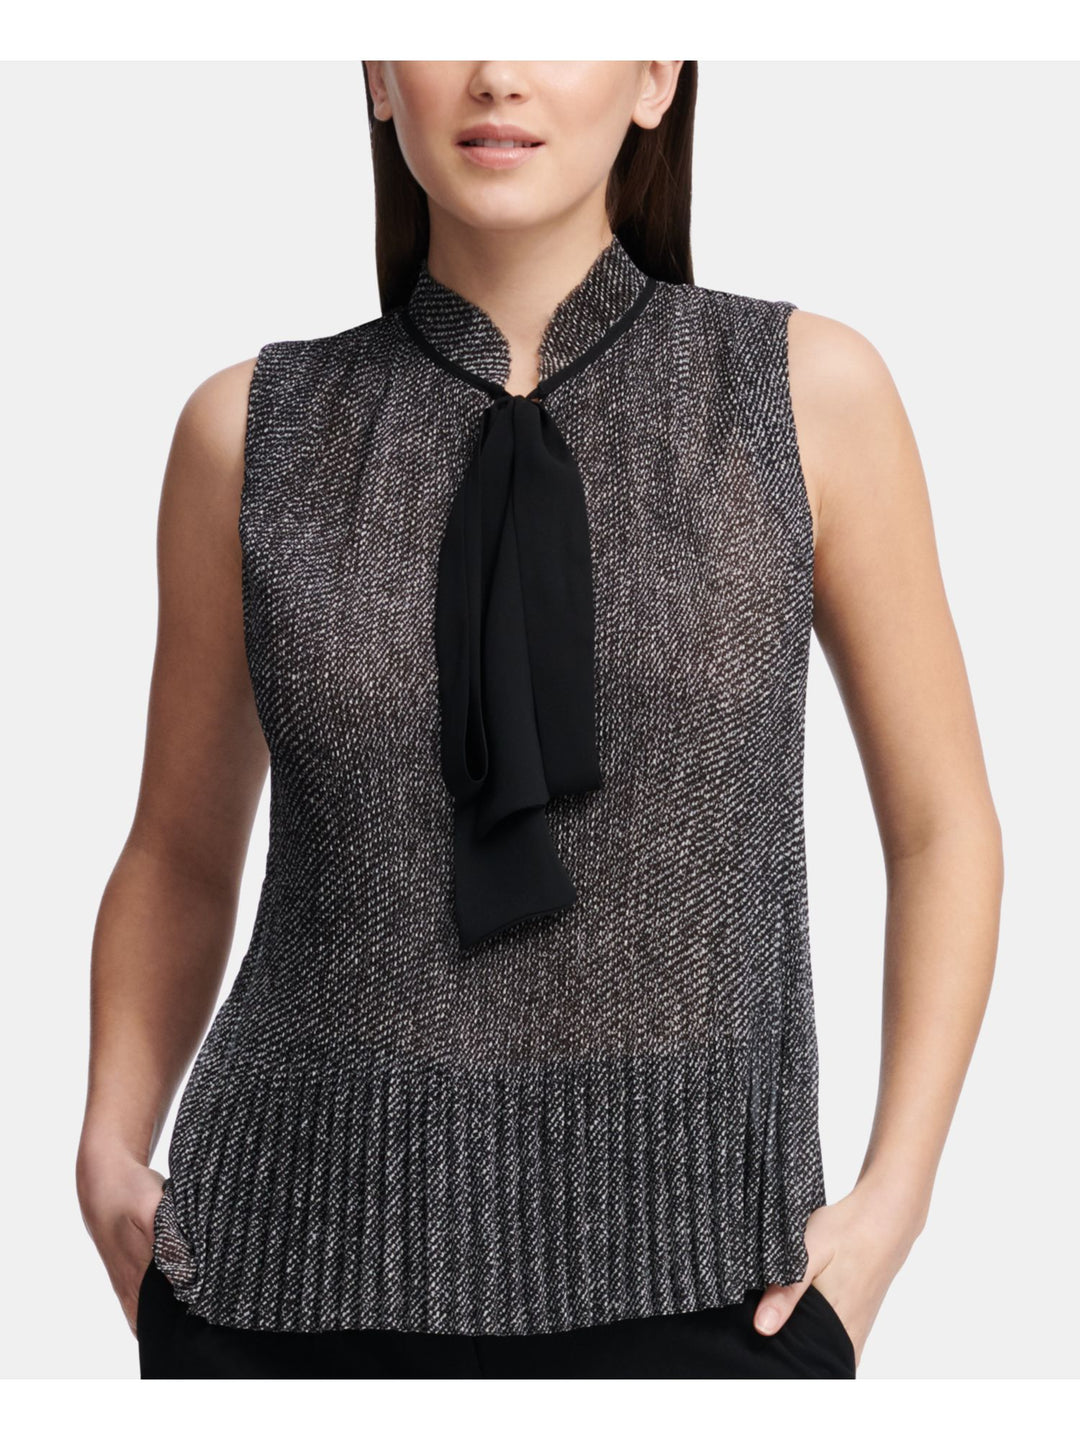 DKNY Women's Printed Pleated Tie Neck Blouse Black Size Petite Medium